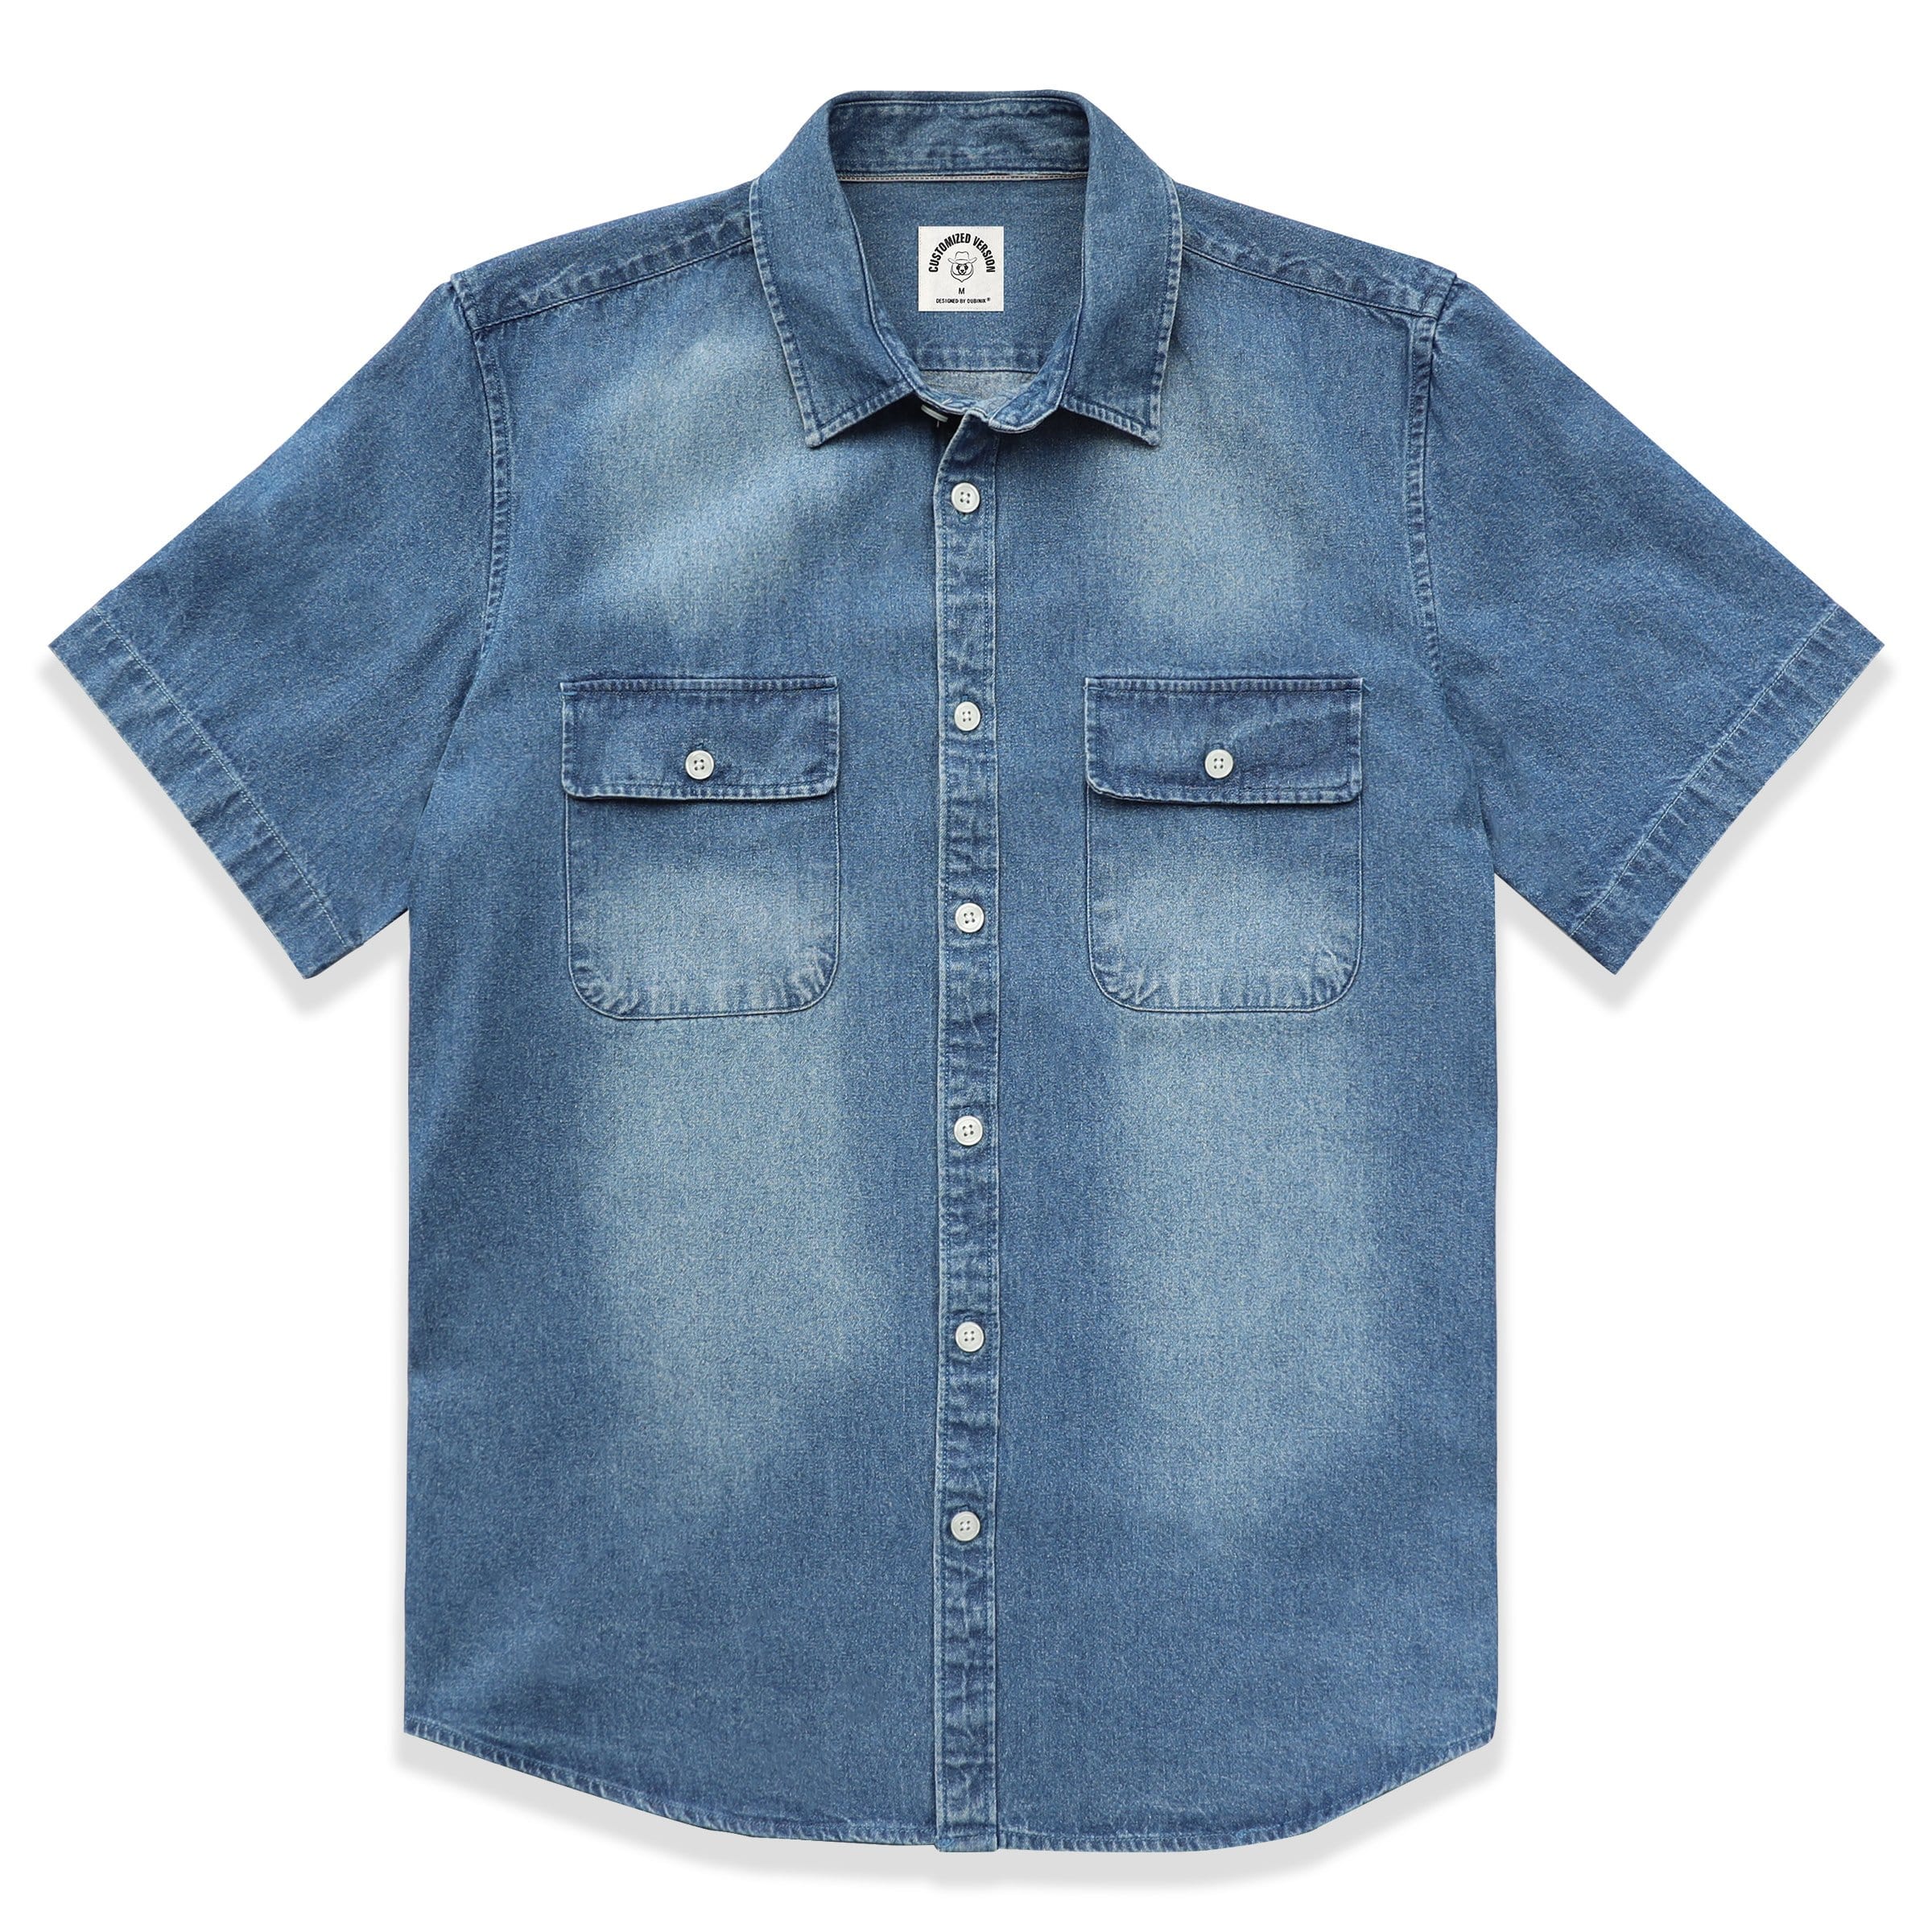 Men's cotton short-sleeved denim shirt #5502